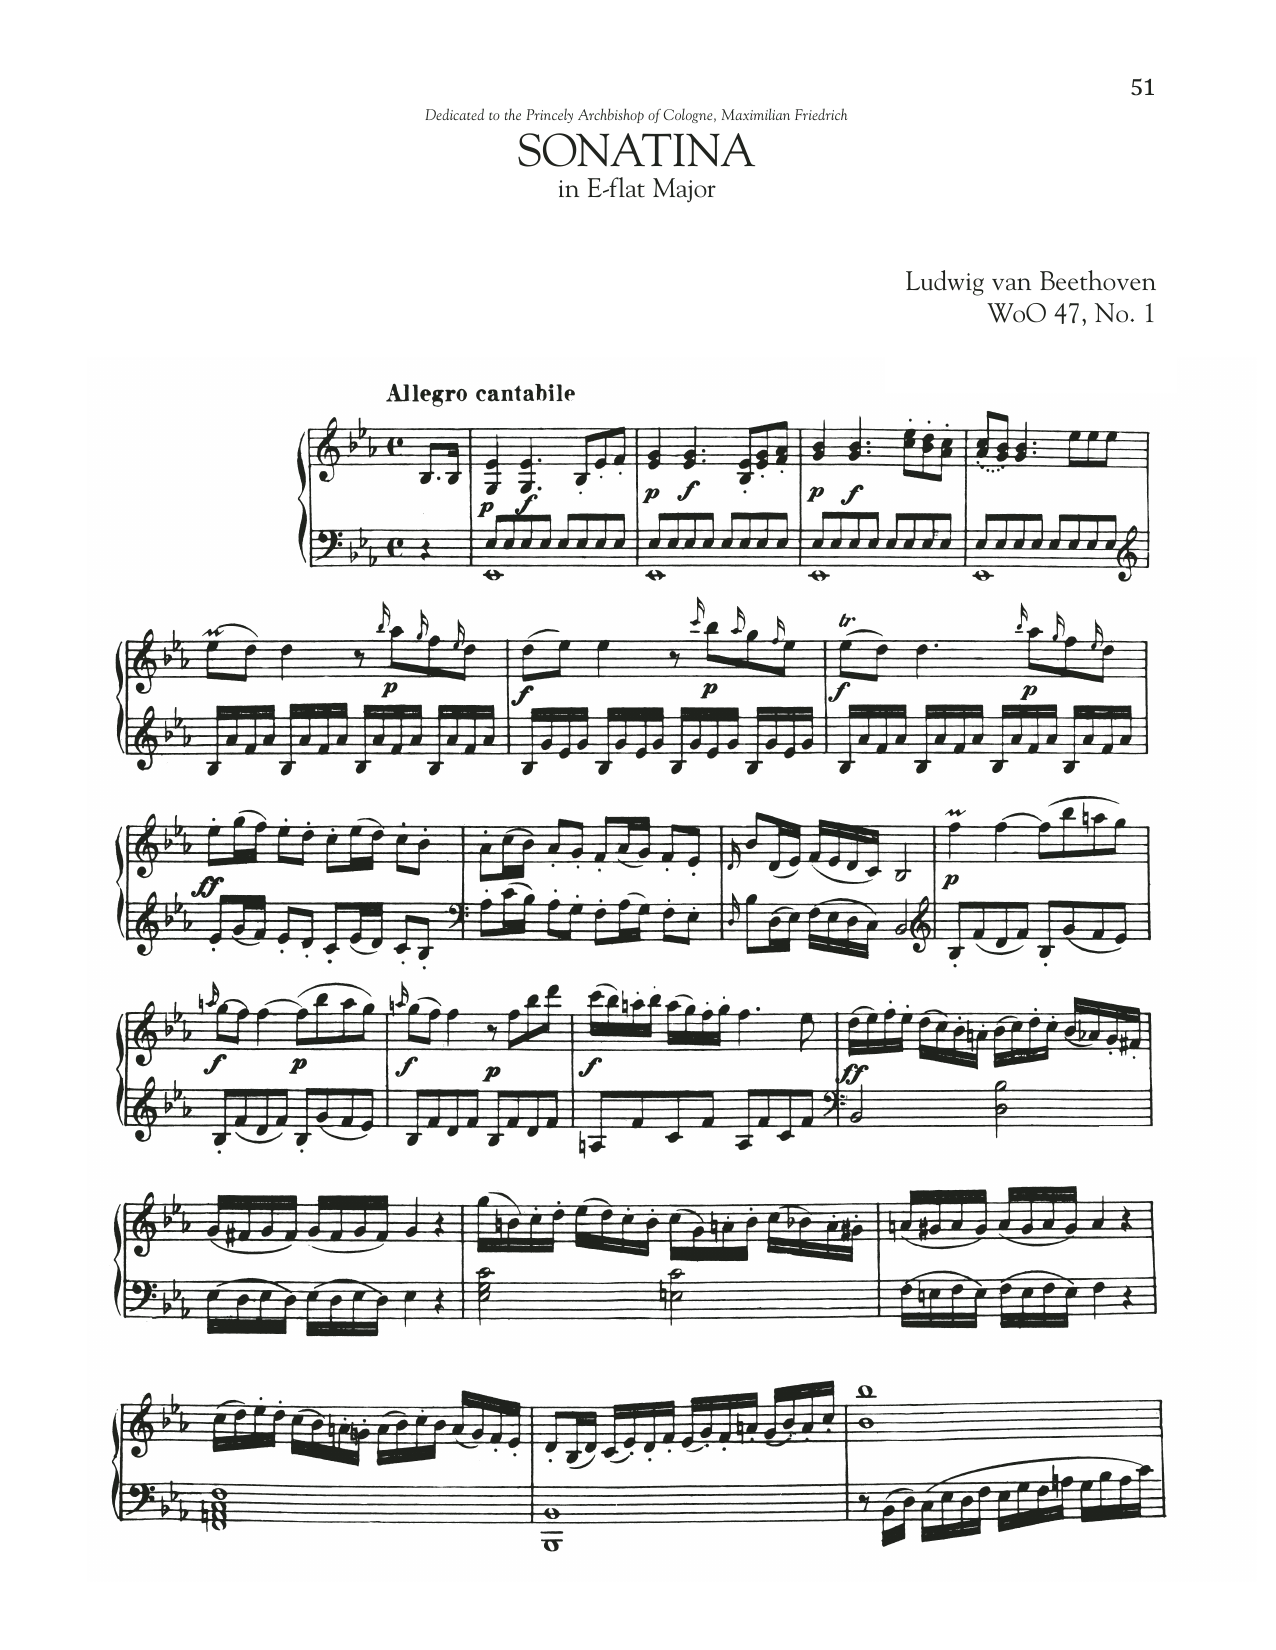 Ludwig van Beethoven Sonata In E-Flat Major, WoO 47, No. 1 Sheet Music Notes & Chords for Piano Solo - Download or Print PDF